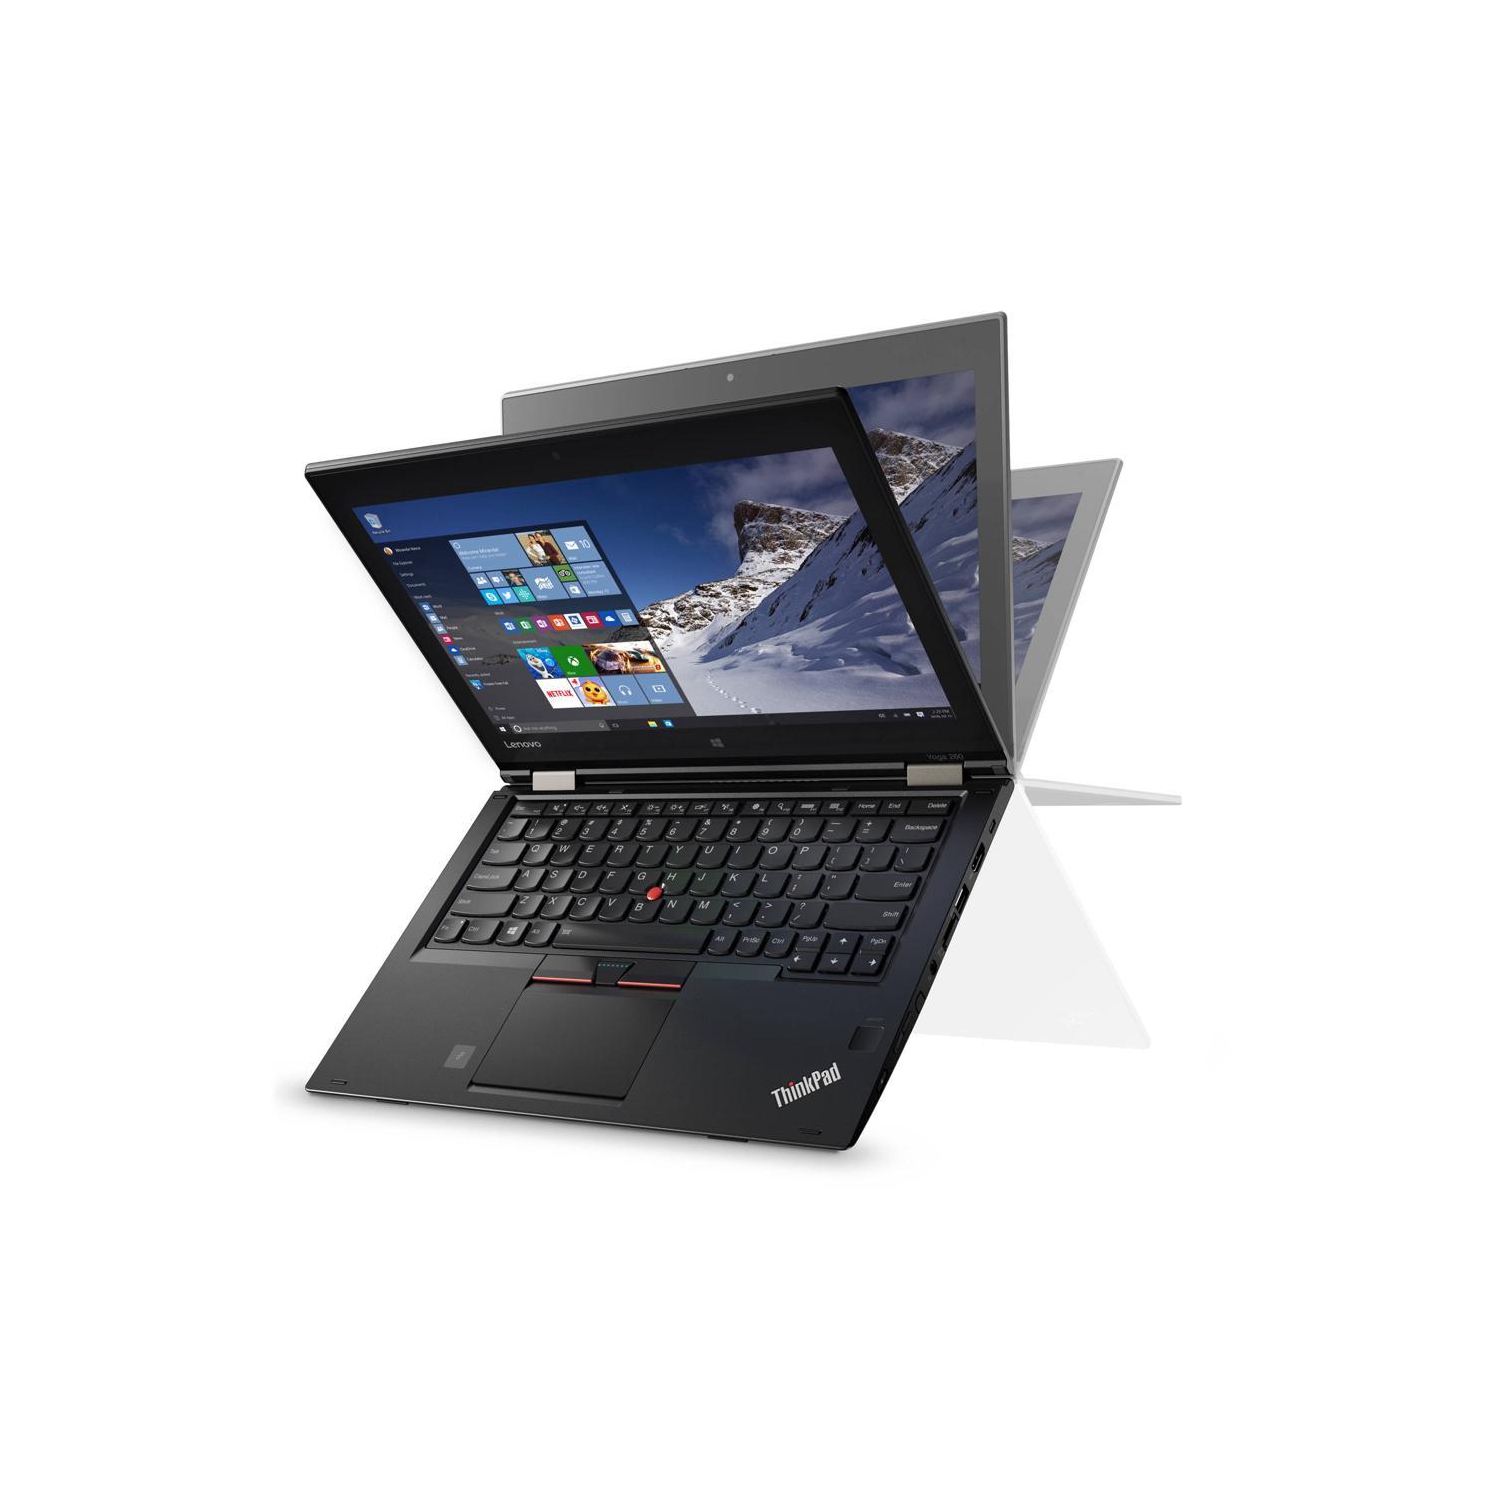 Refurbished (Good) - Lenovo ThinkPad Yoga 260 .- i5 (6th Gen) 6300U.- 8GB RAM.-128GB SSD .- Intel HD Graphics 520 .- Windows 10 Professional.- 1 Year Warranty.-